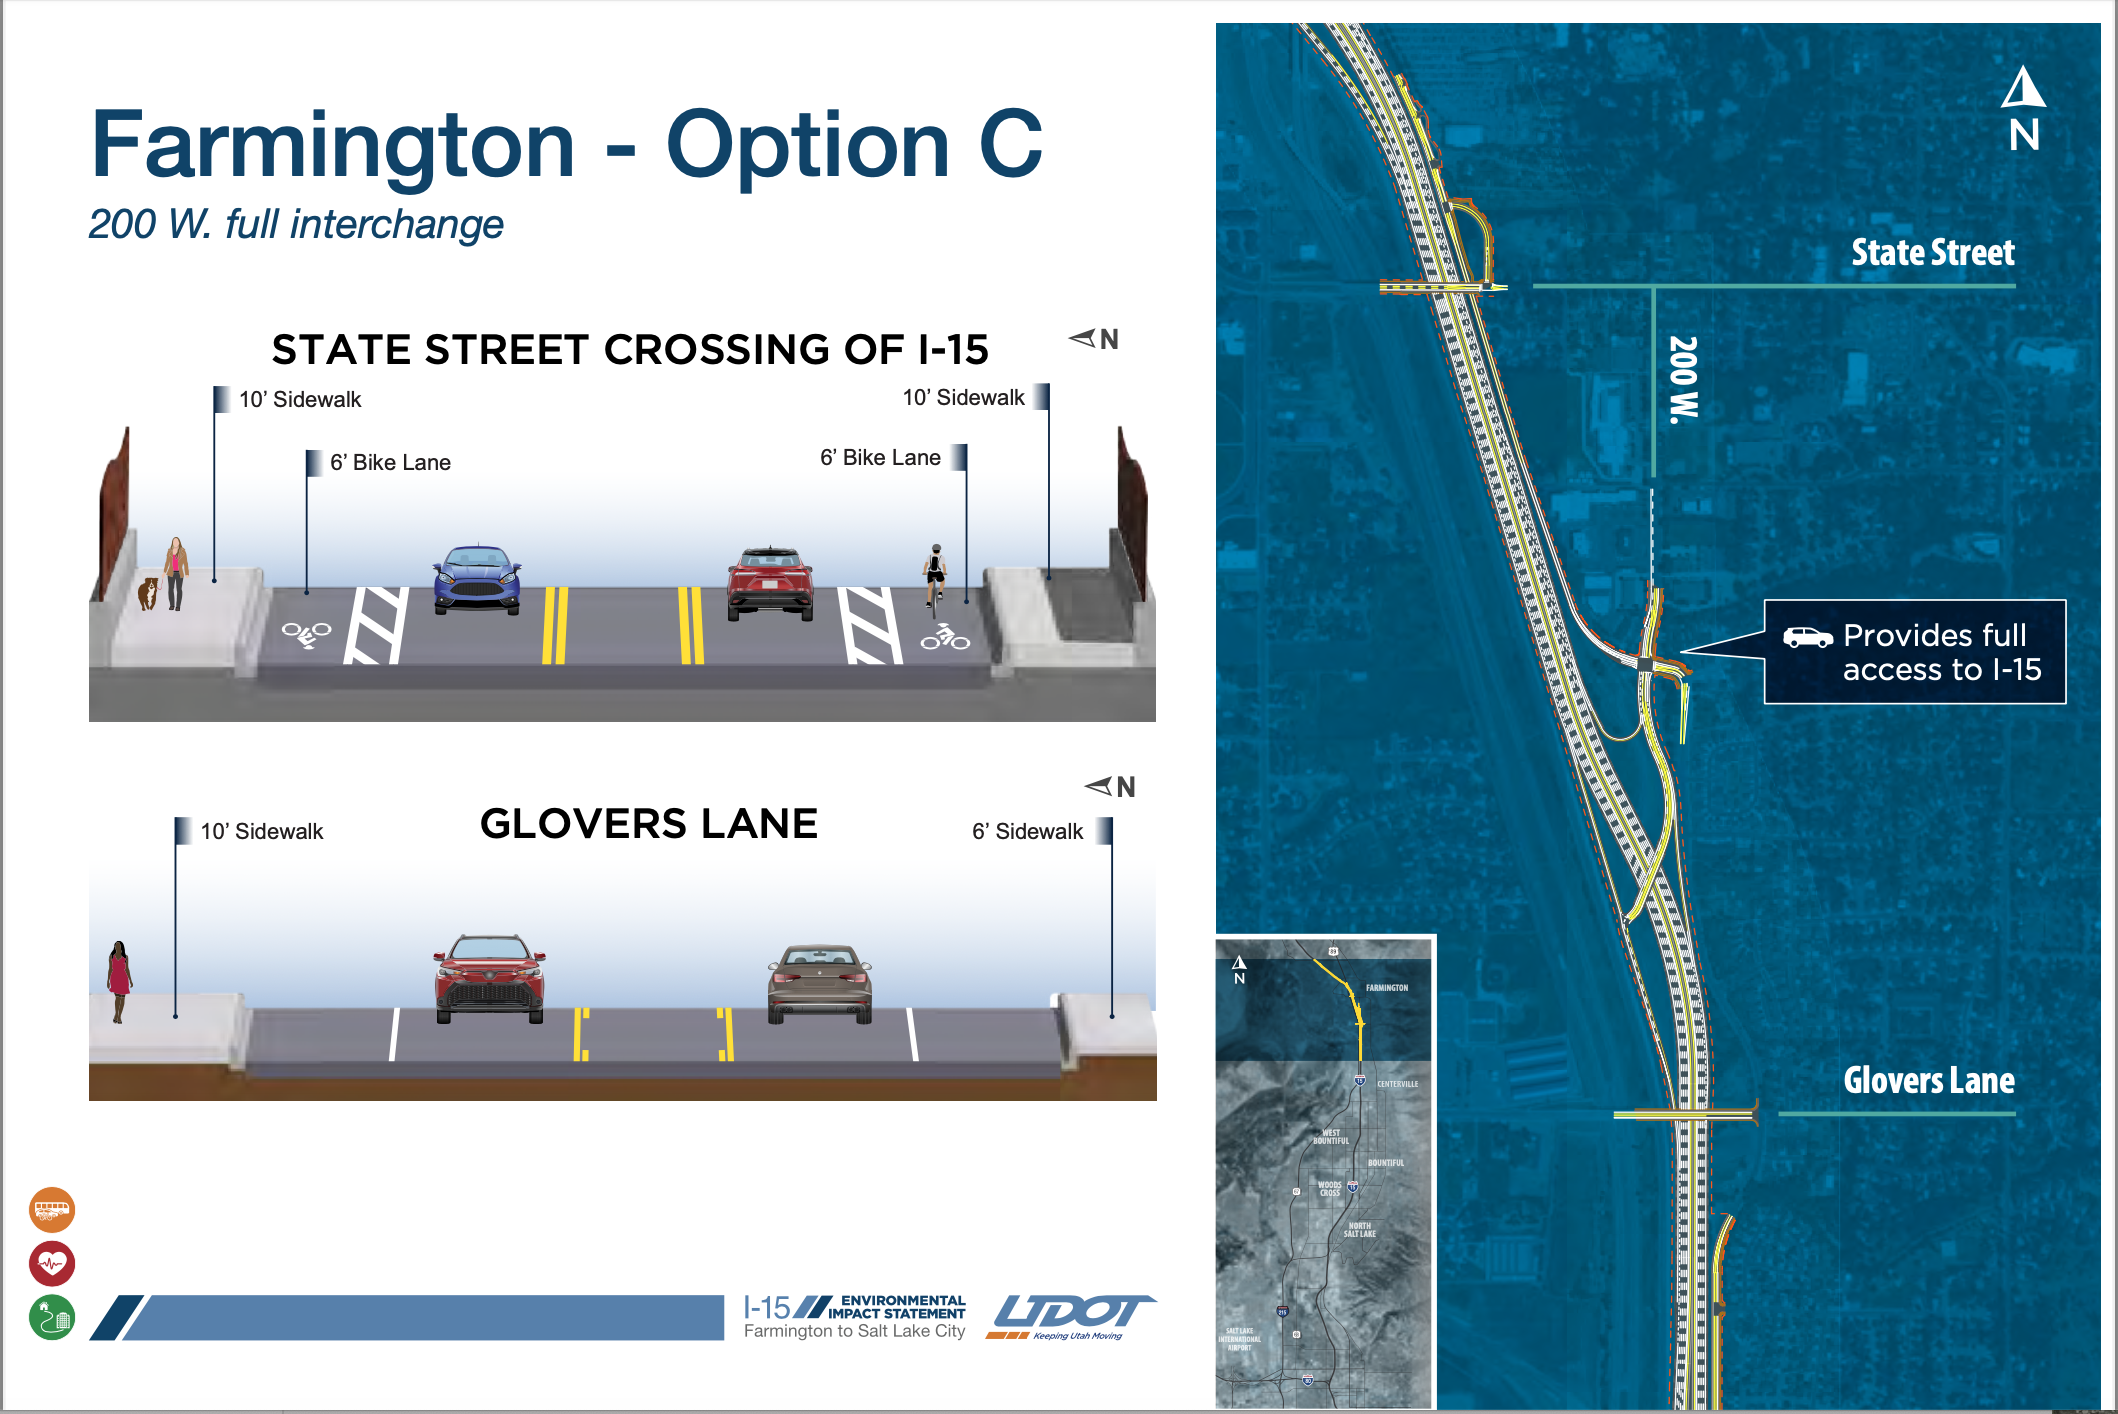 Option C is least destructive but it is missing a designated Lagoon lane.